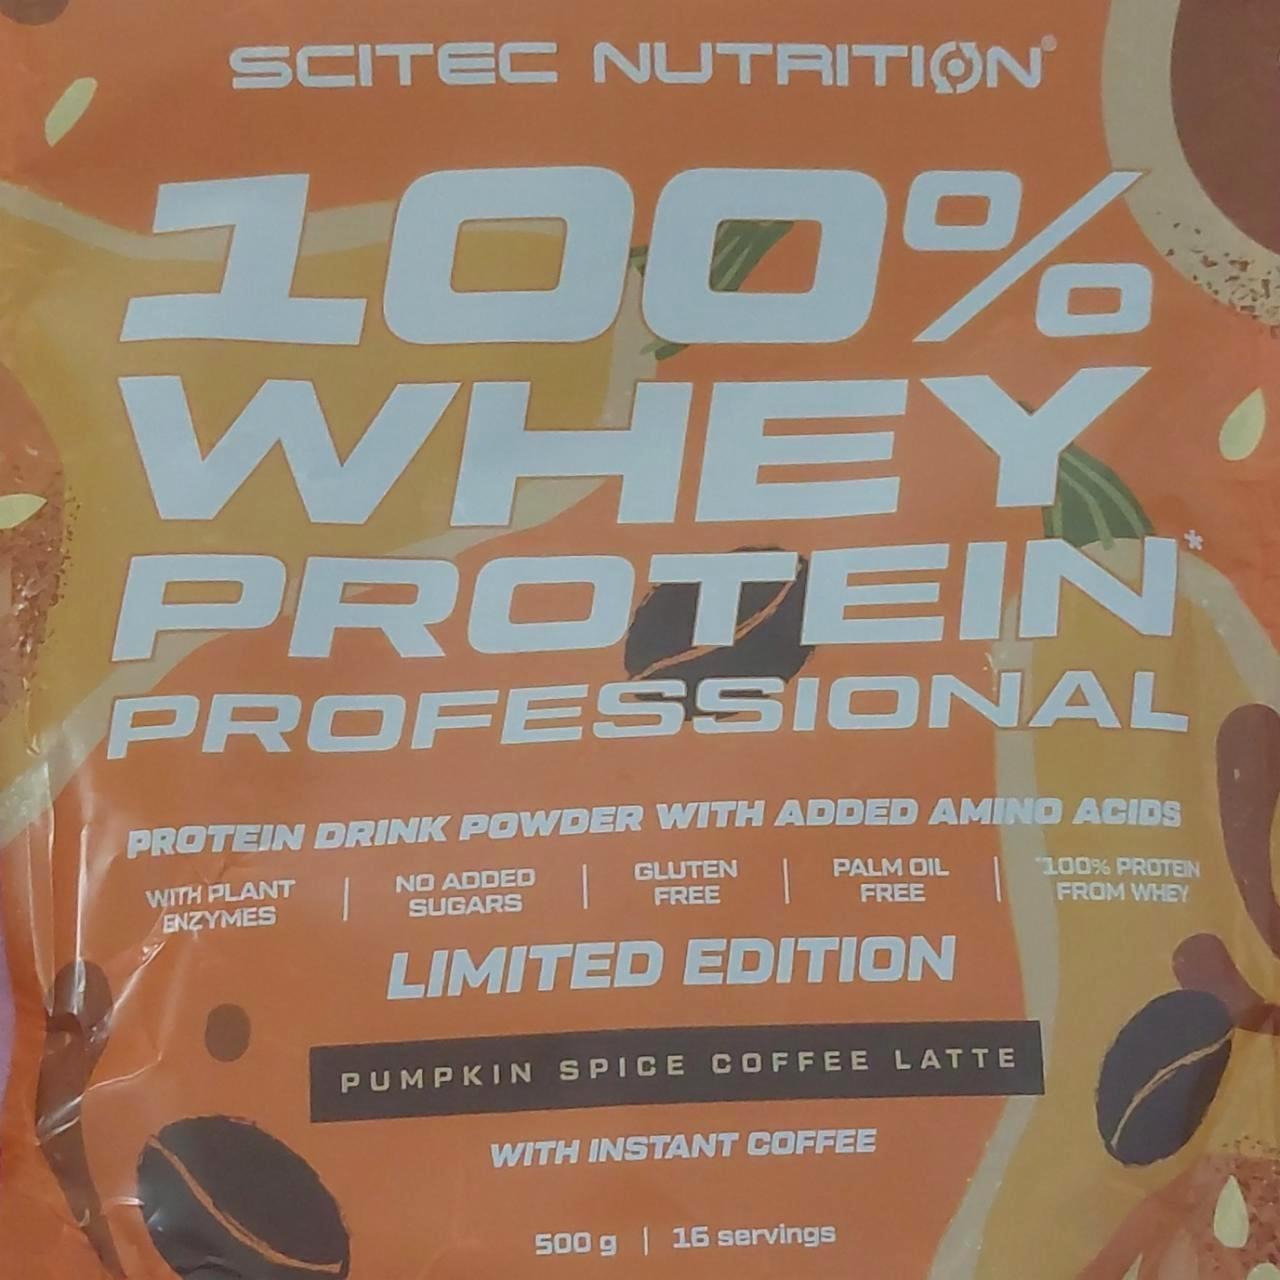 Képek - 100% Whey protein professional Pumpkin spice coffee latte Scitec Nutrition